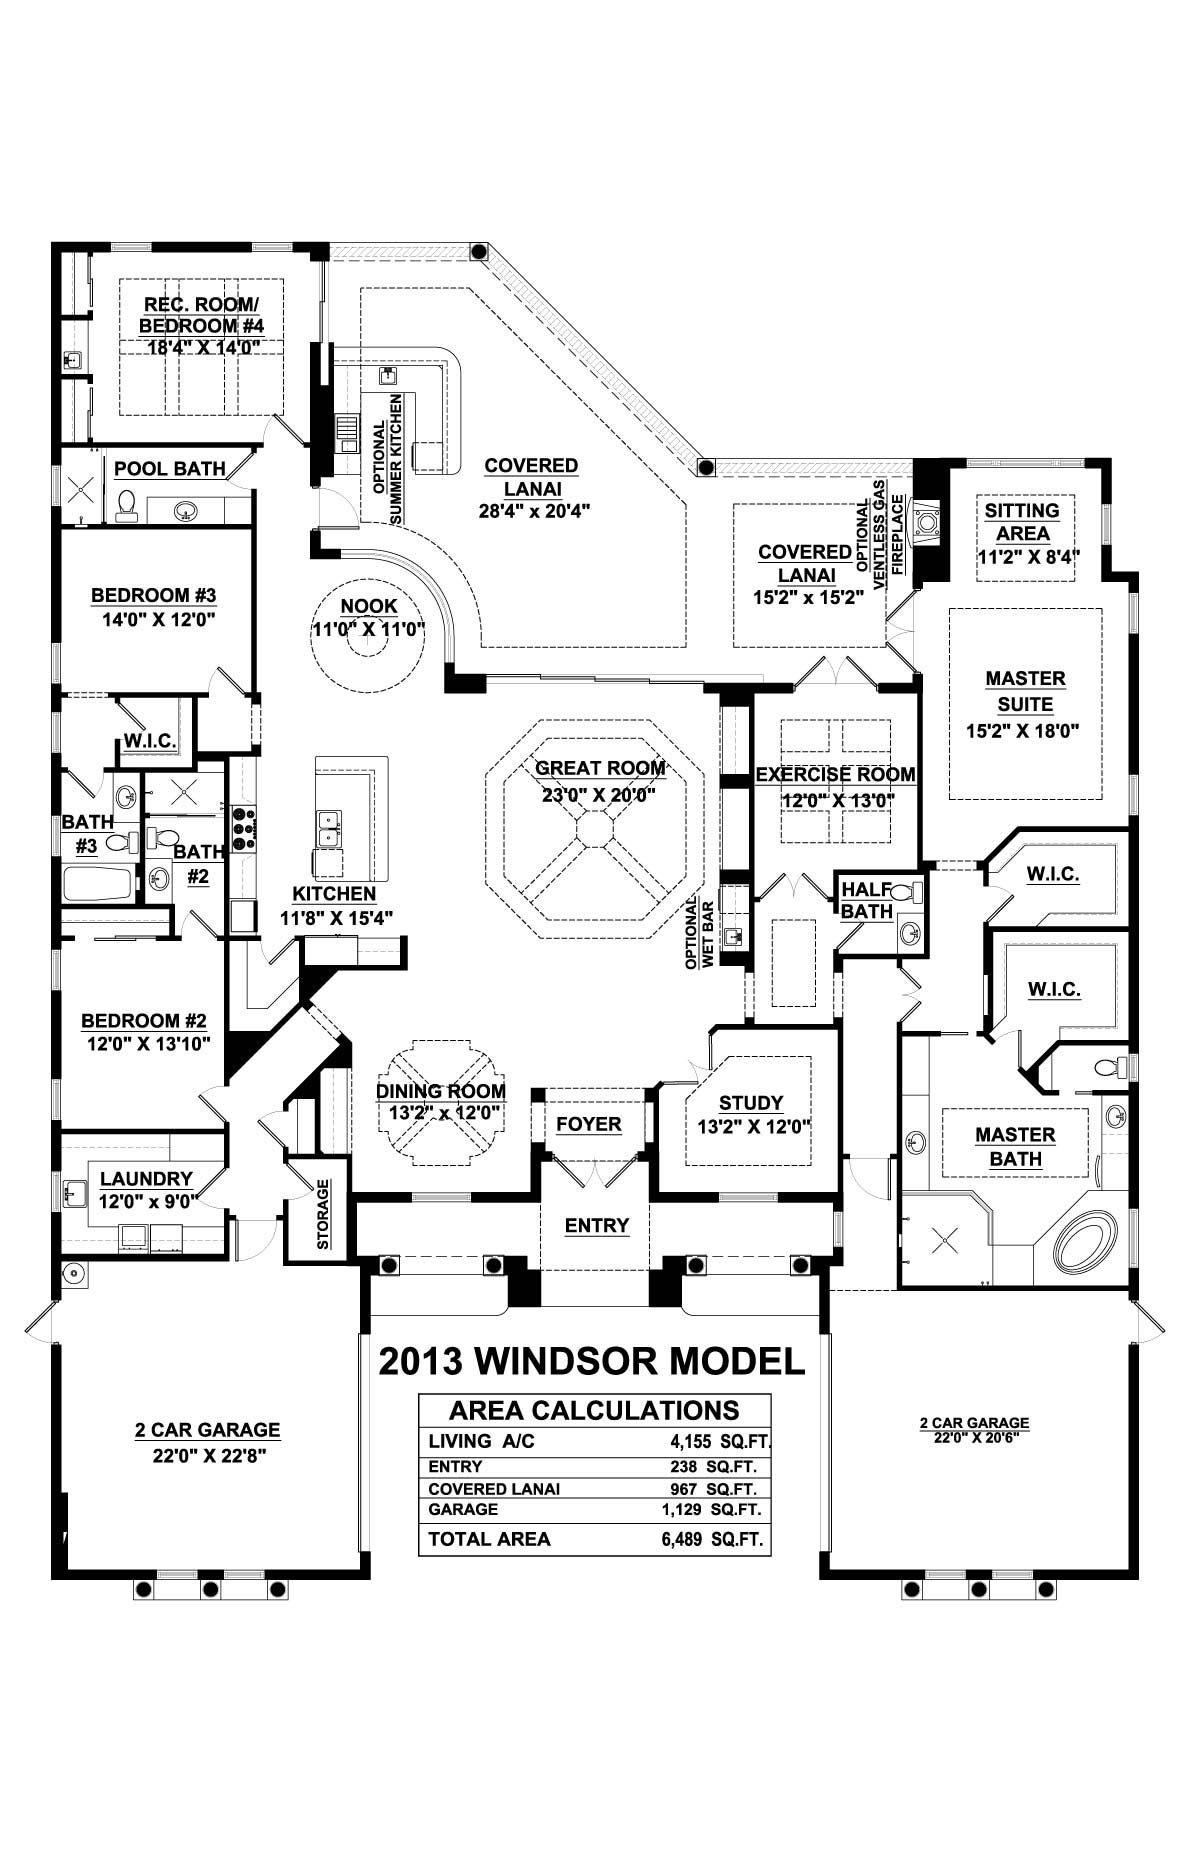 Windsor Floor Plan in Lakoya, Stock Construction, 4 bedroom, 4 1/2 bath, great room, exercise room, study, dining room, dinette, Split 4-car garage